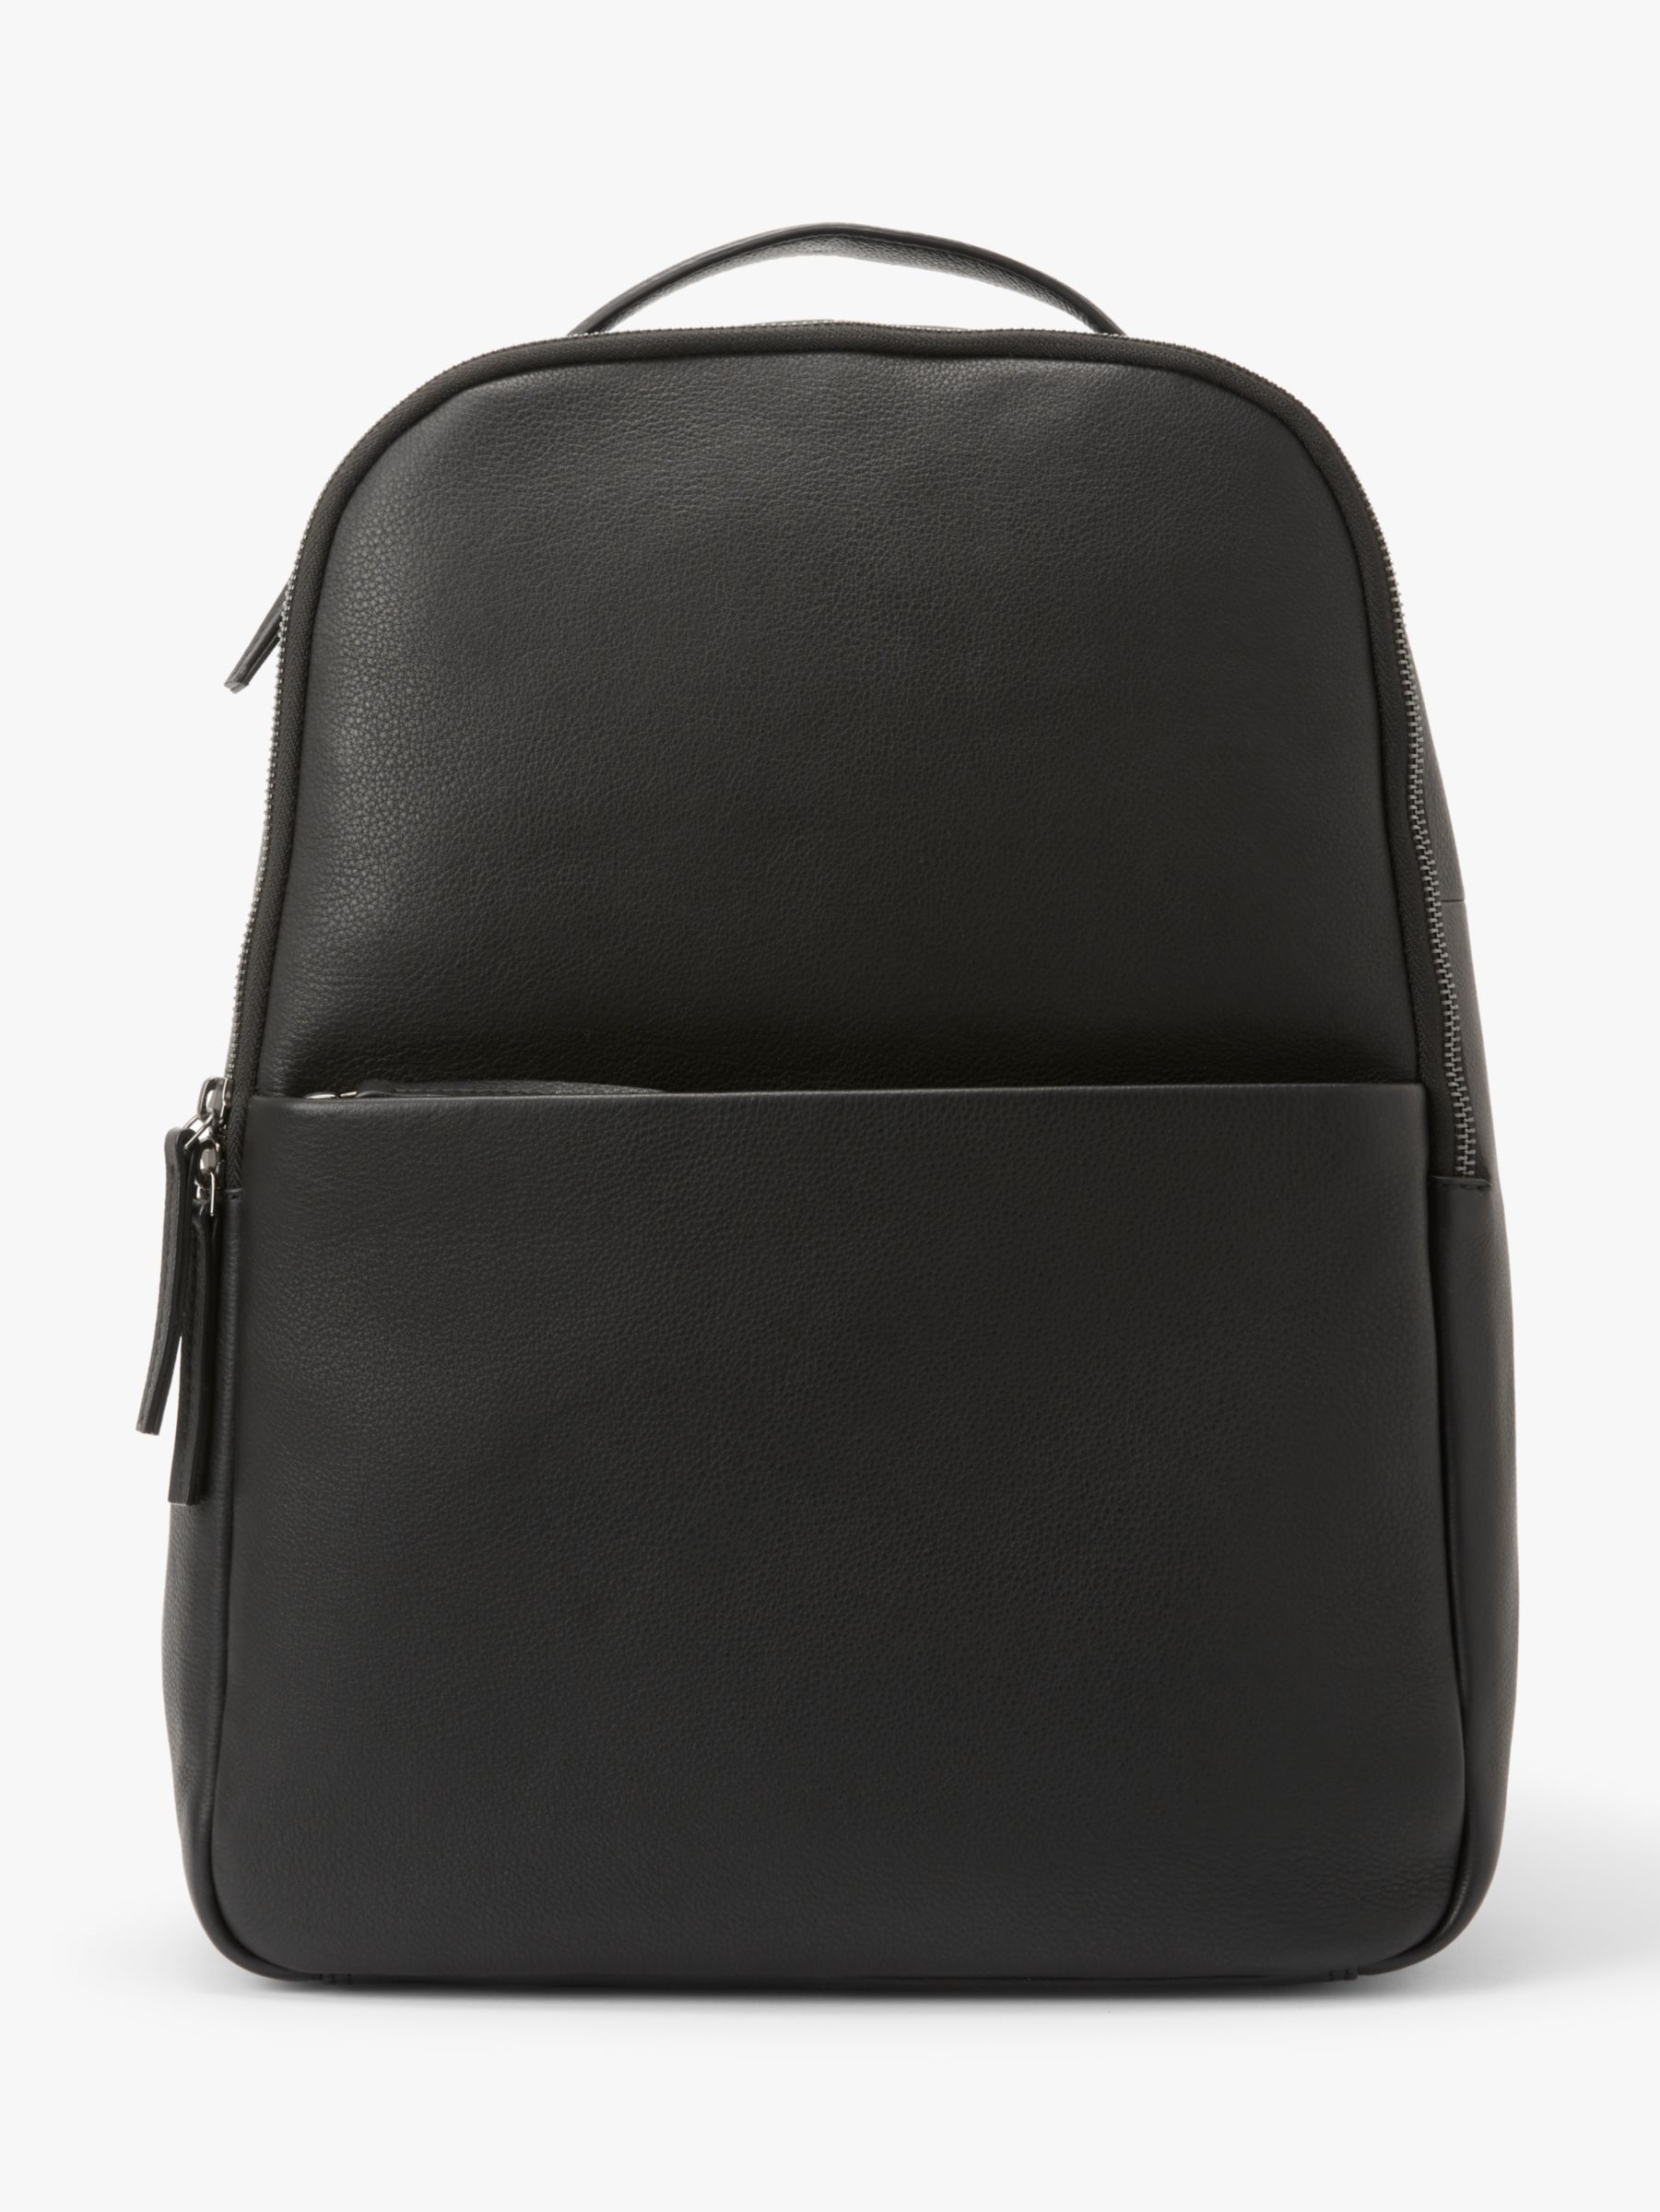 John Lewis Oslo Leather Backpack, Black at John Lewis & Partners